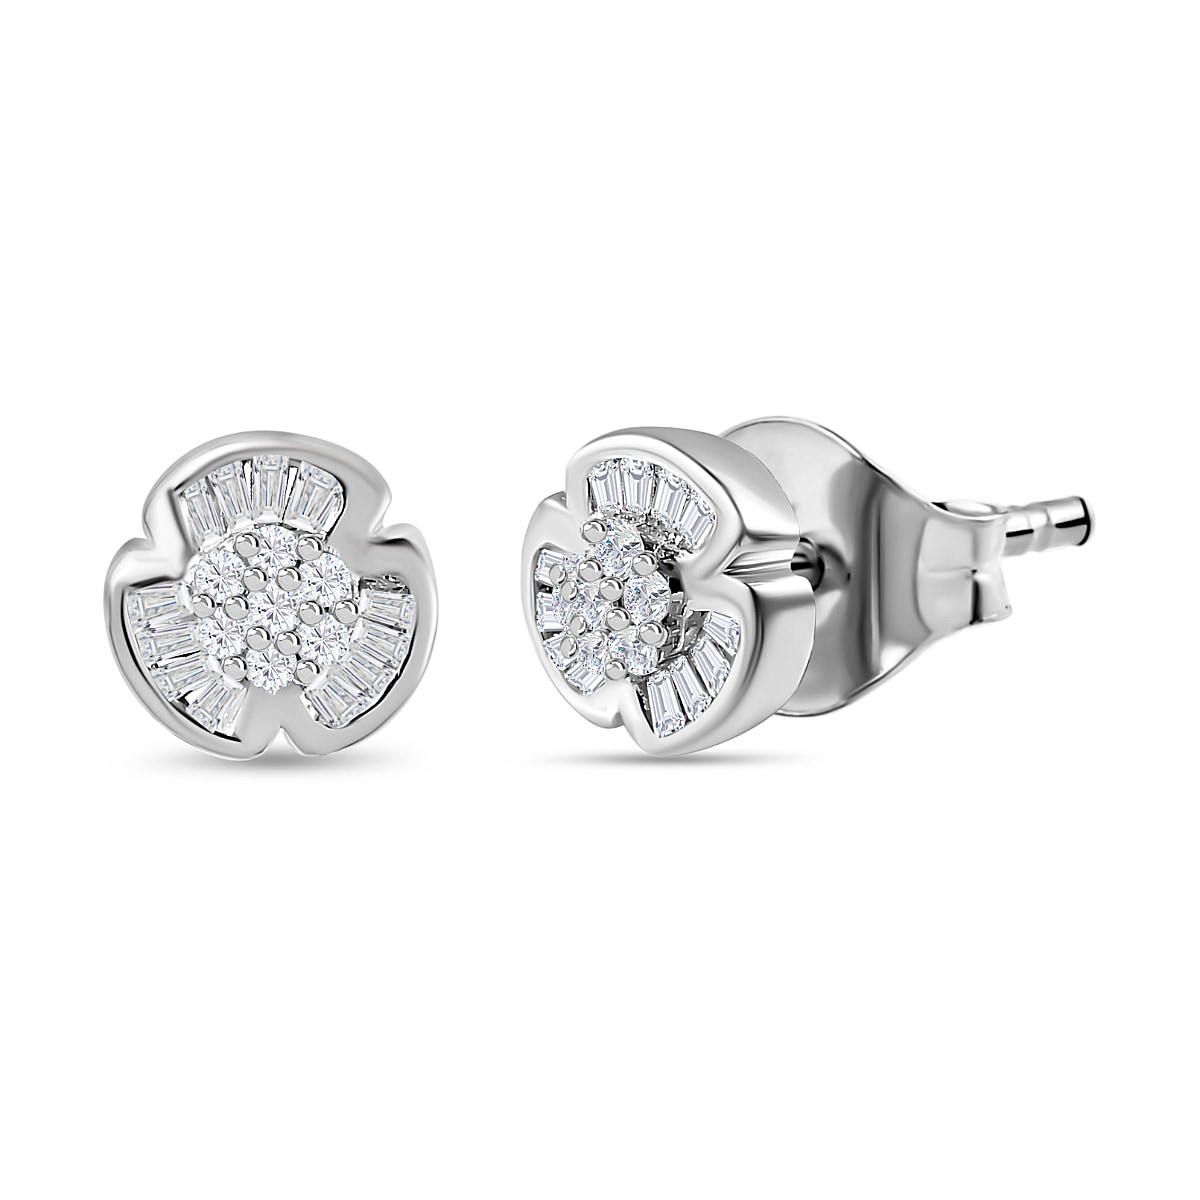 Diamond Stud Earrings in Platinum Overlay Sterling Silver